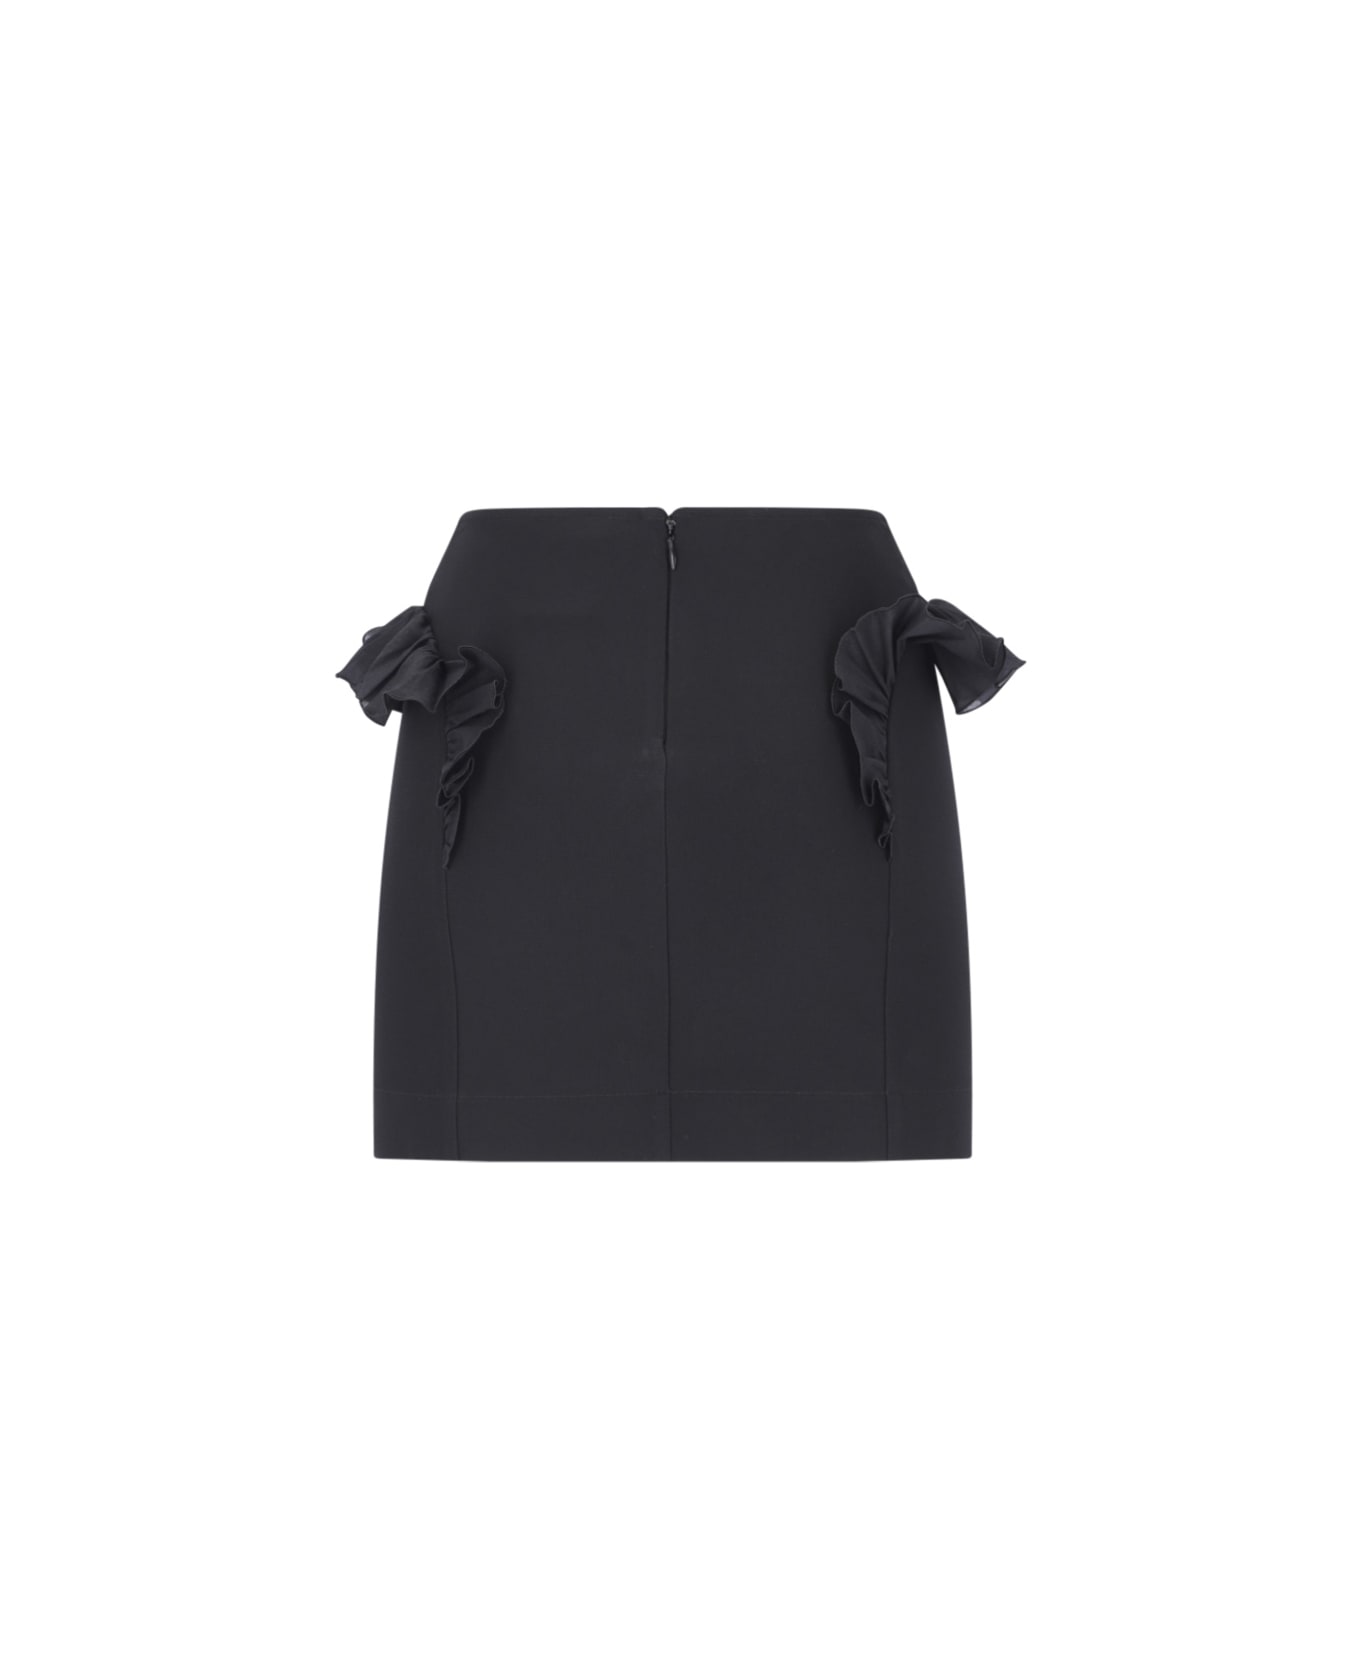 Nensi Dojaka Ruffle Detail Mini Skirt - Black  